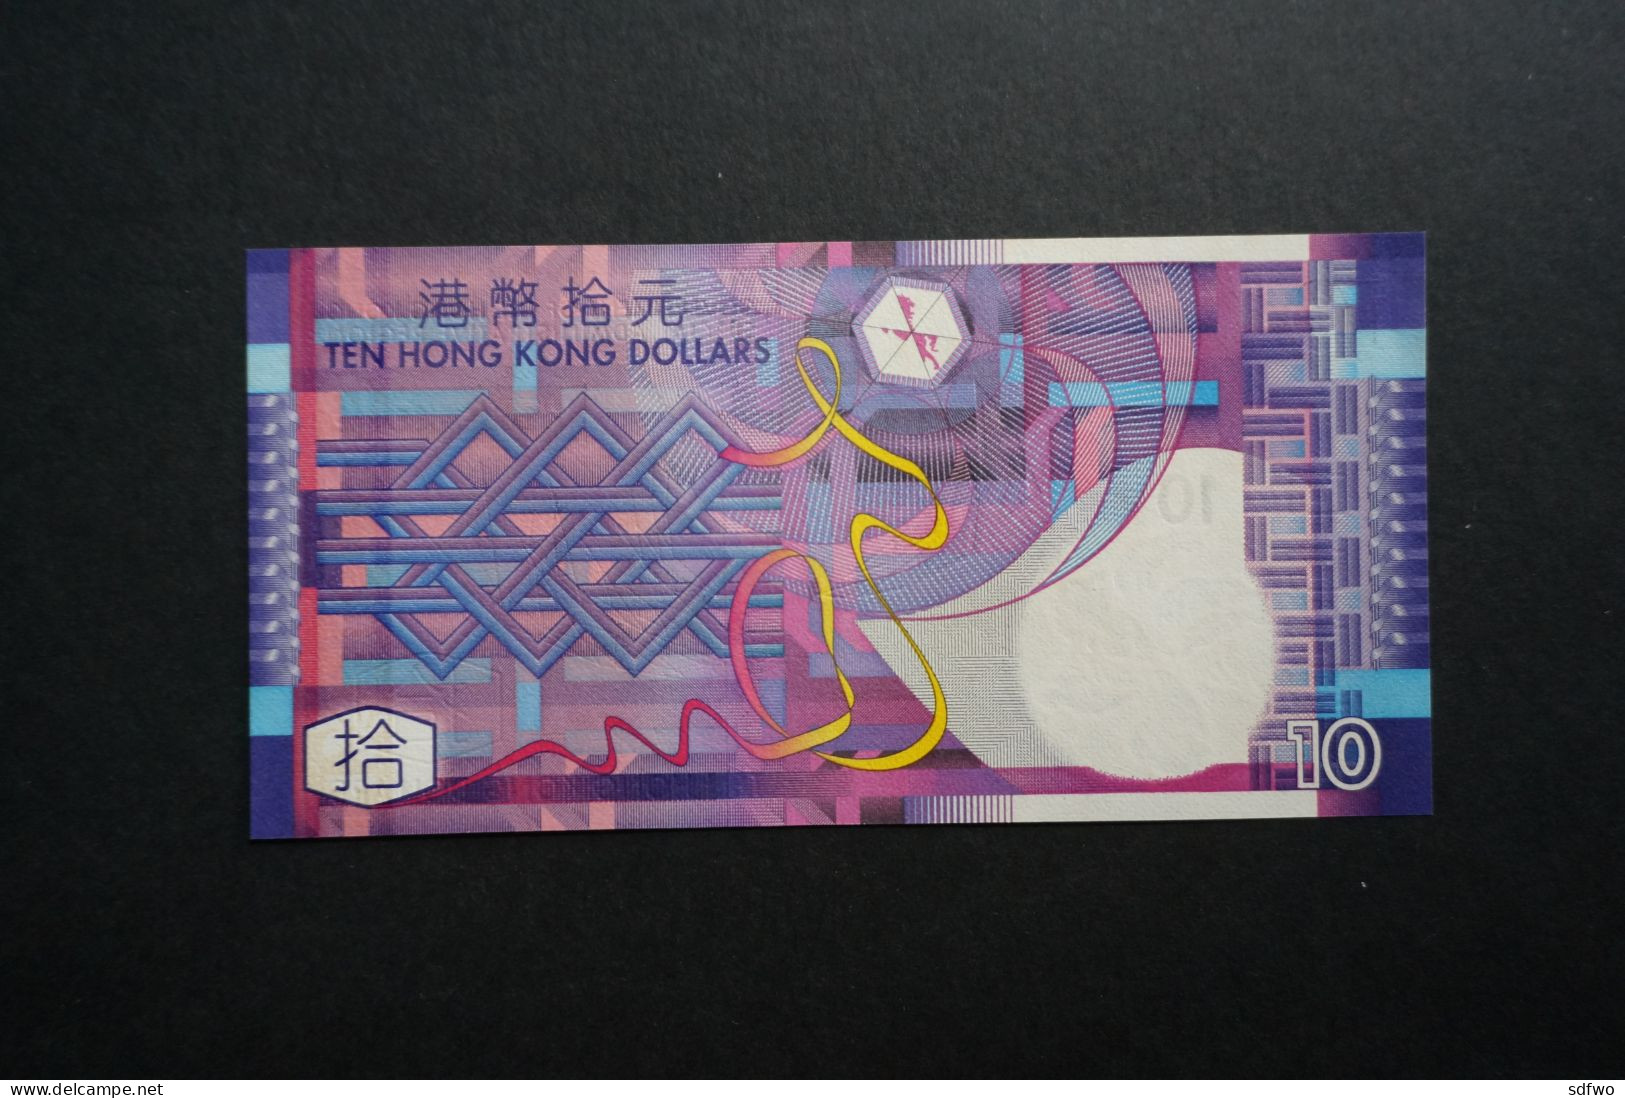 (M) 2002 HONG KONG 10 DOLLARS NOTE - #DA222288 (UNC) - Hong Kong